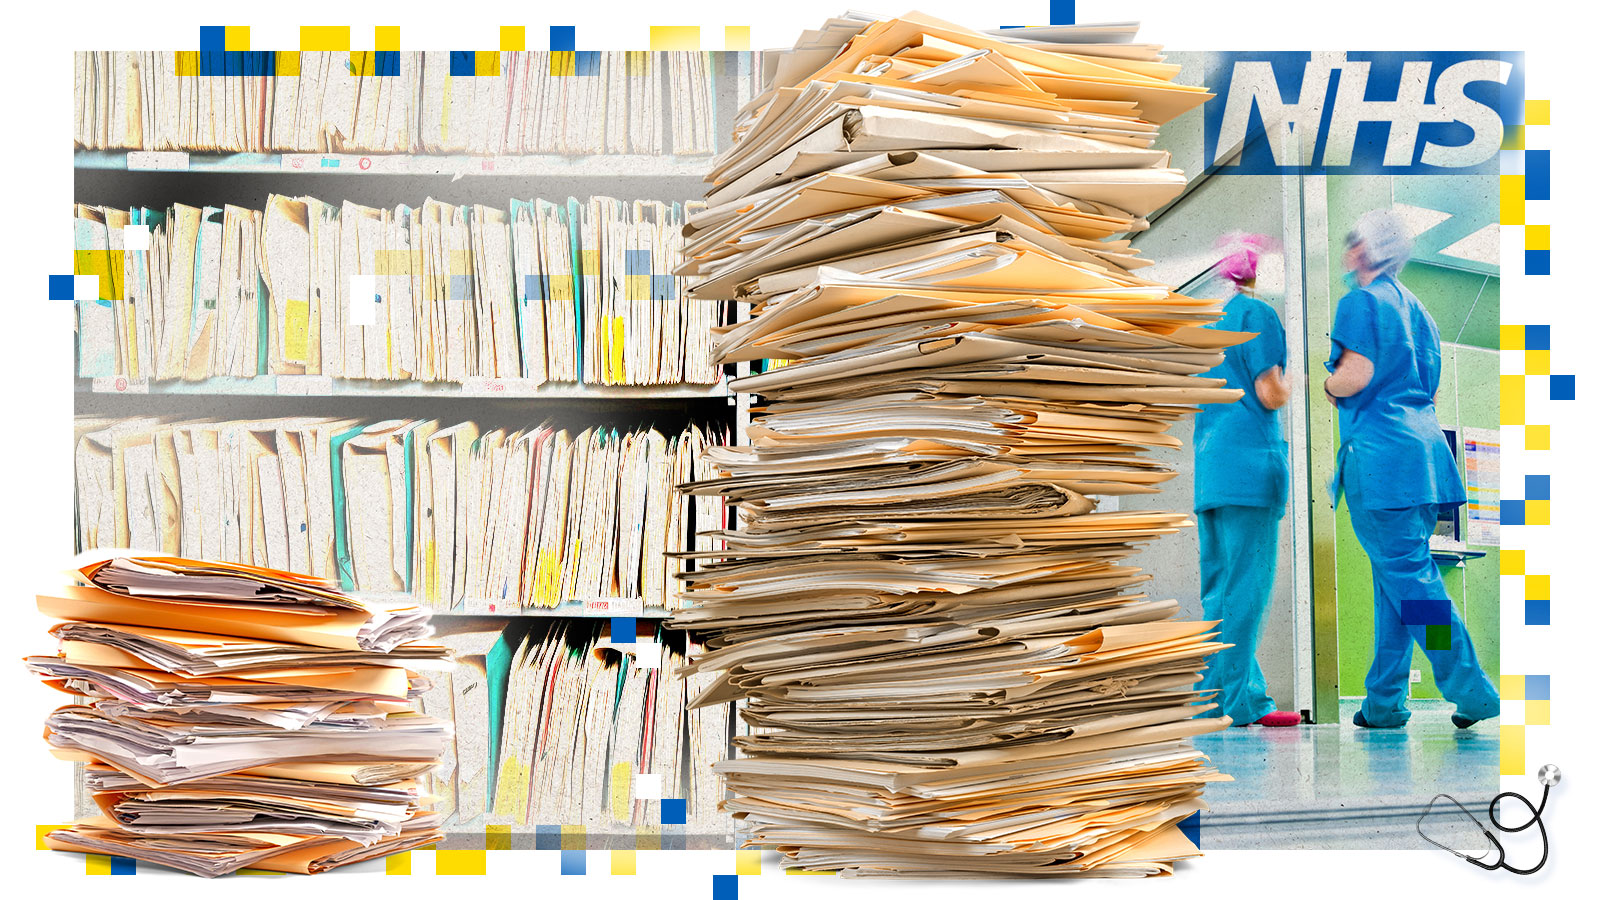 NHS spent £1bn on storing medical records